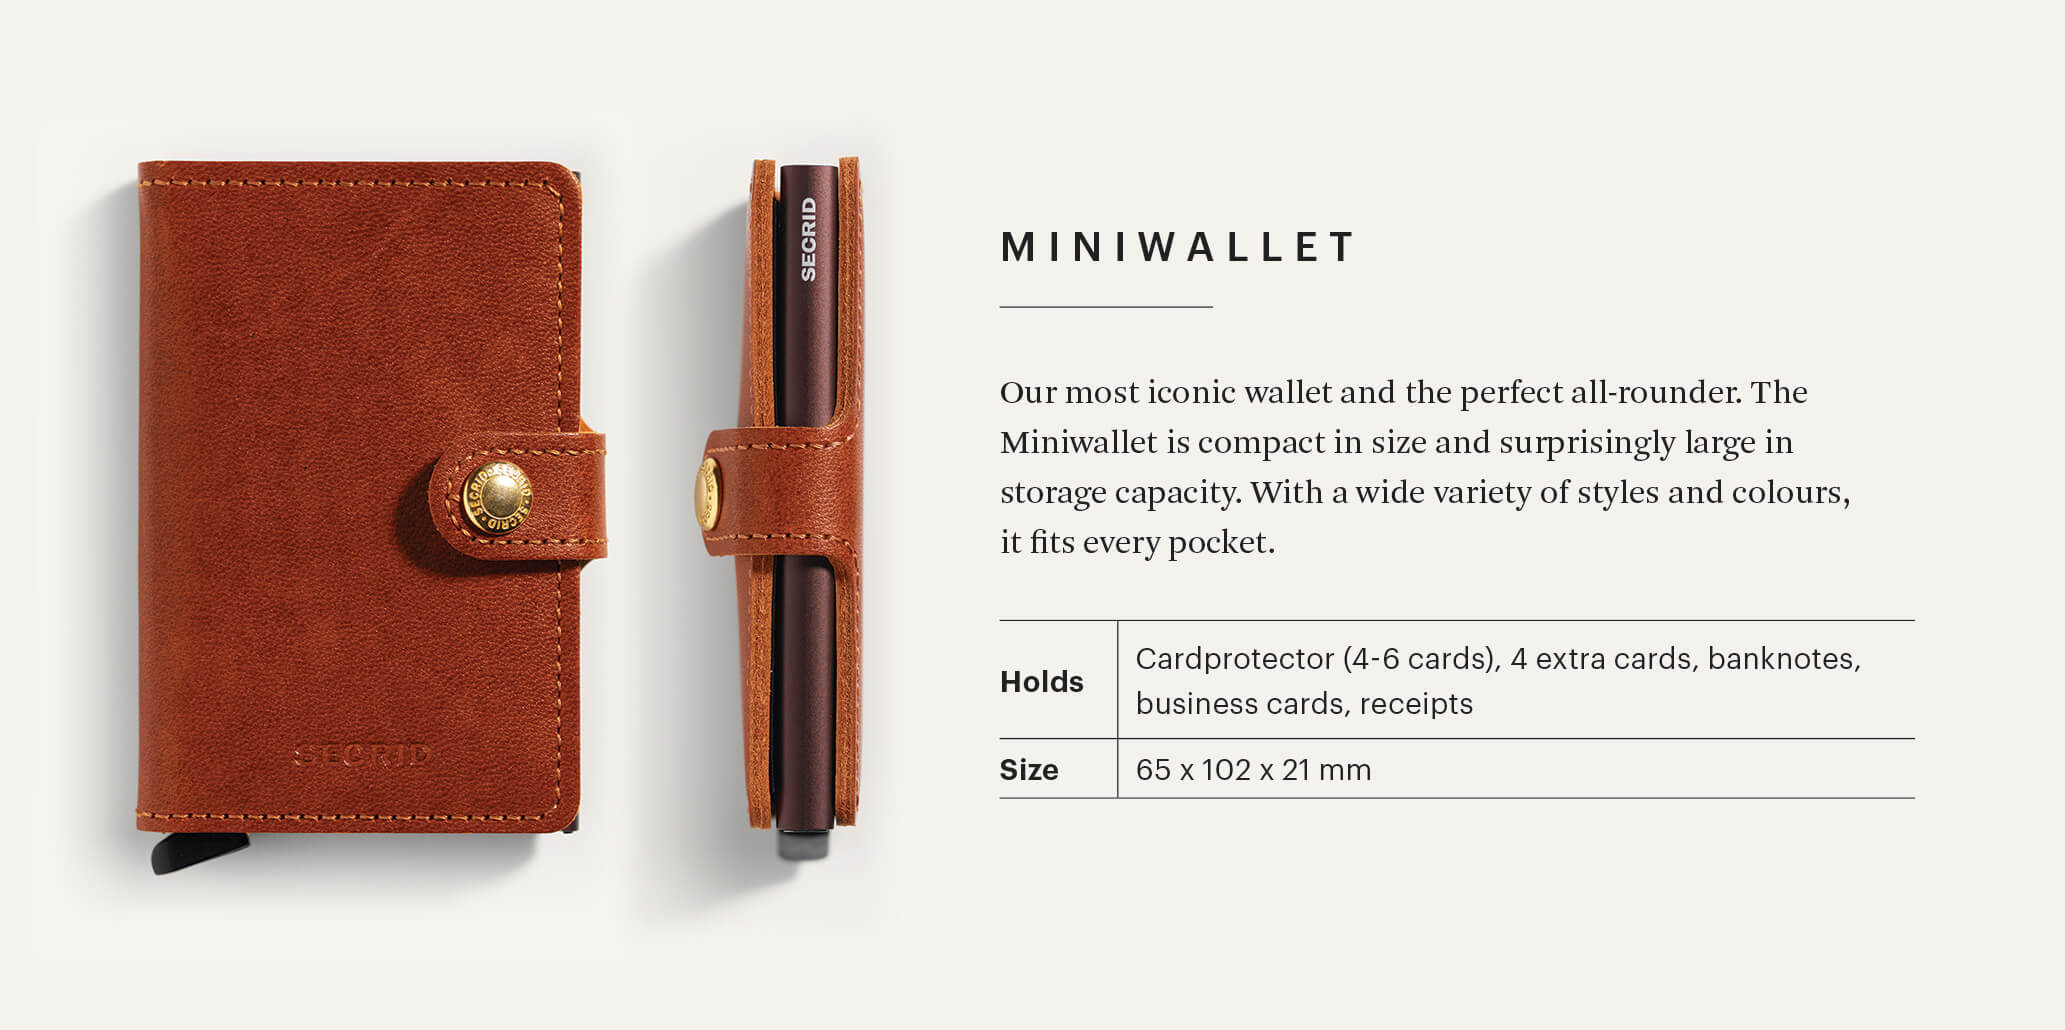 Miniwallet | Saffiano Caramel Leather | by Secrid Wallets - Lifestory